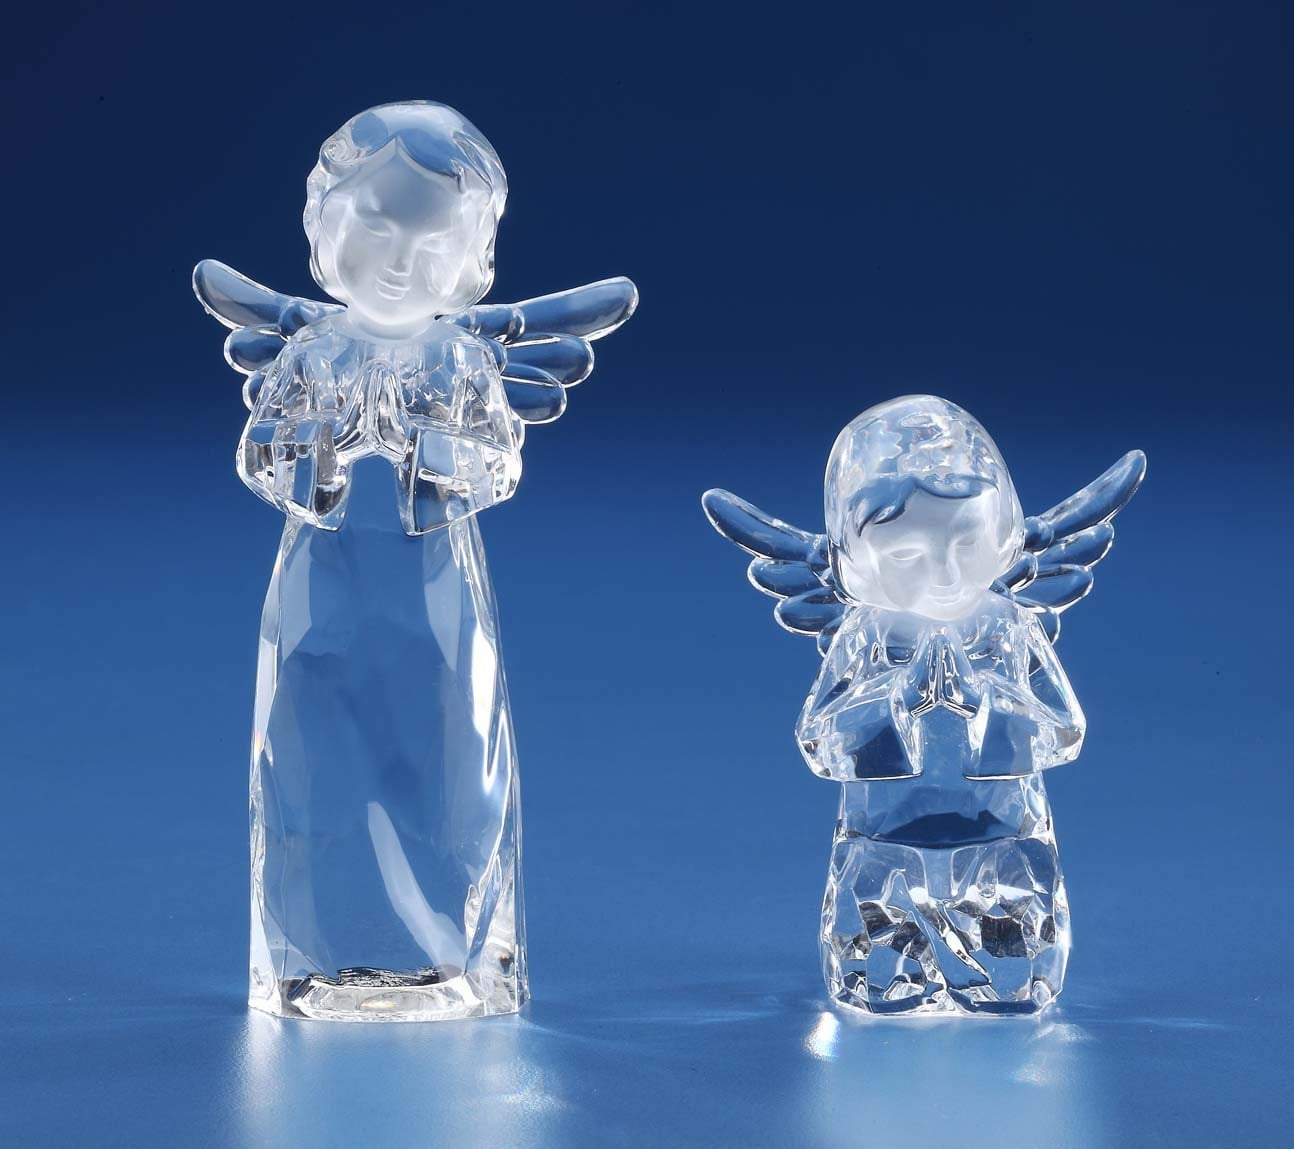 Icy Craft Small Praying Angels - Walmart.com